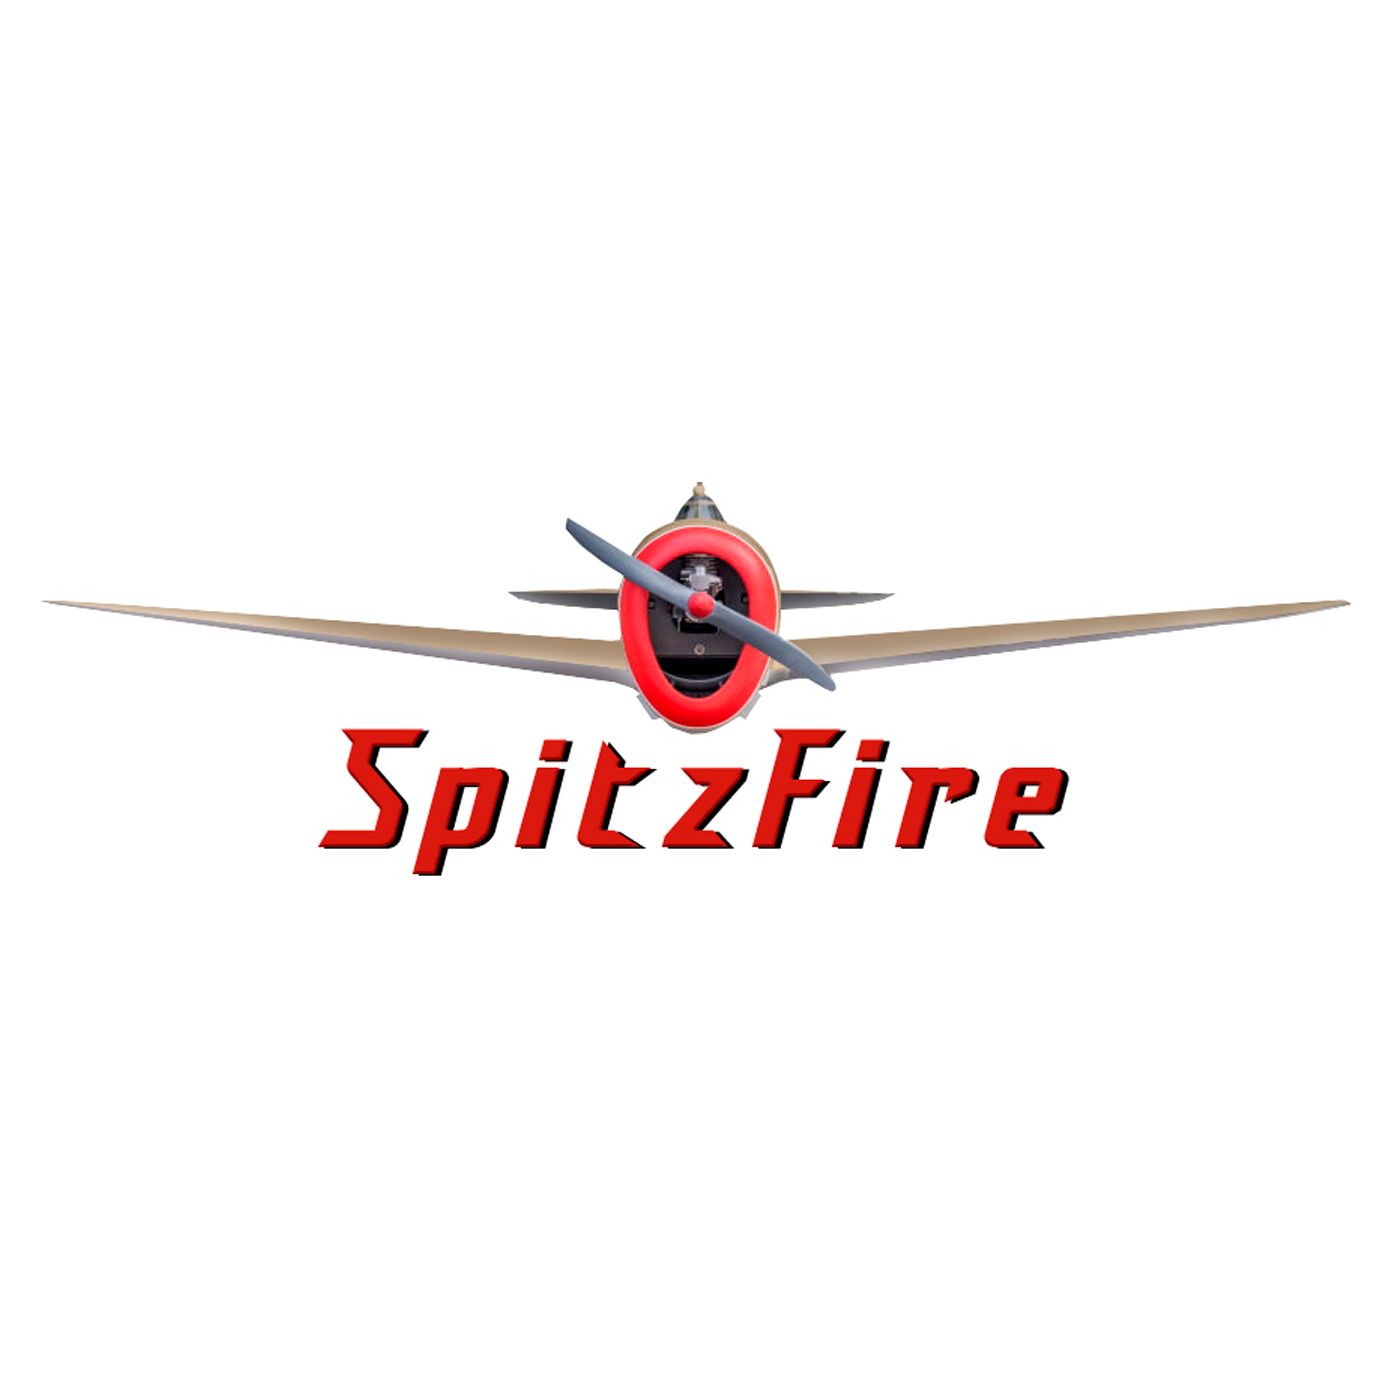 Spitzfire